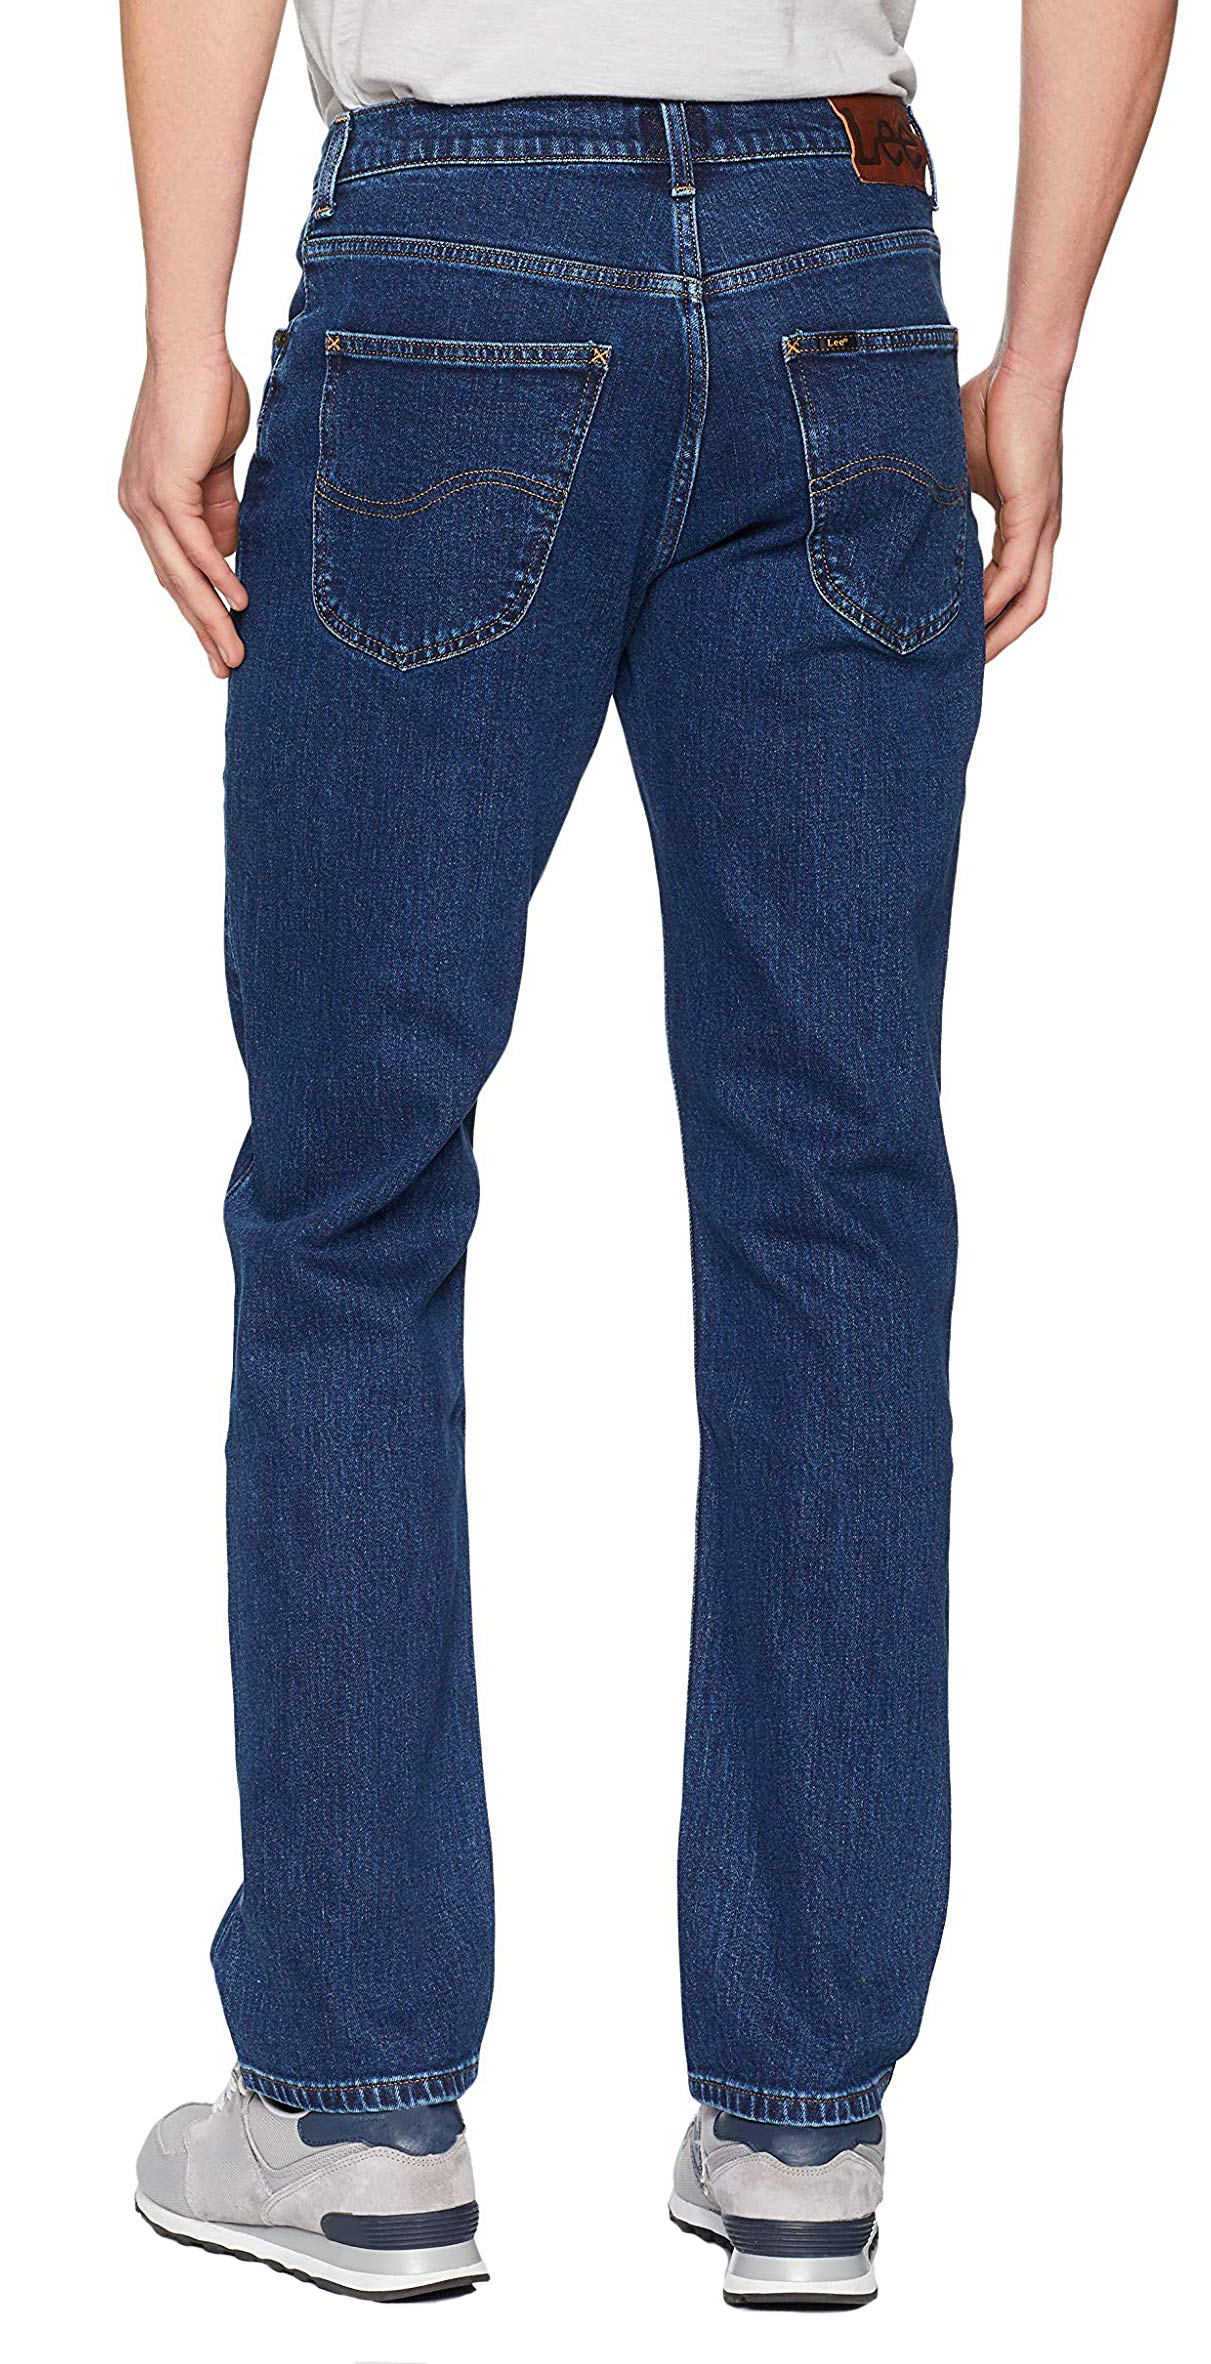 Lee Brooklyn New Men's Stretch Jeans Straight Leg Dark Stone Blue Denim | eBay